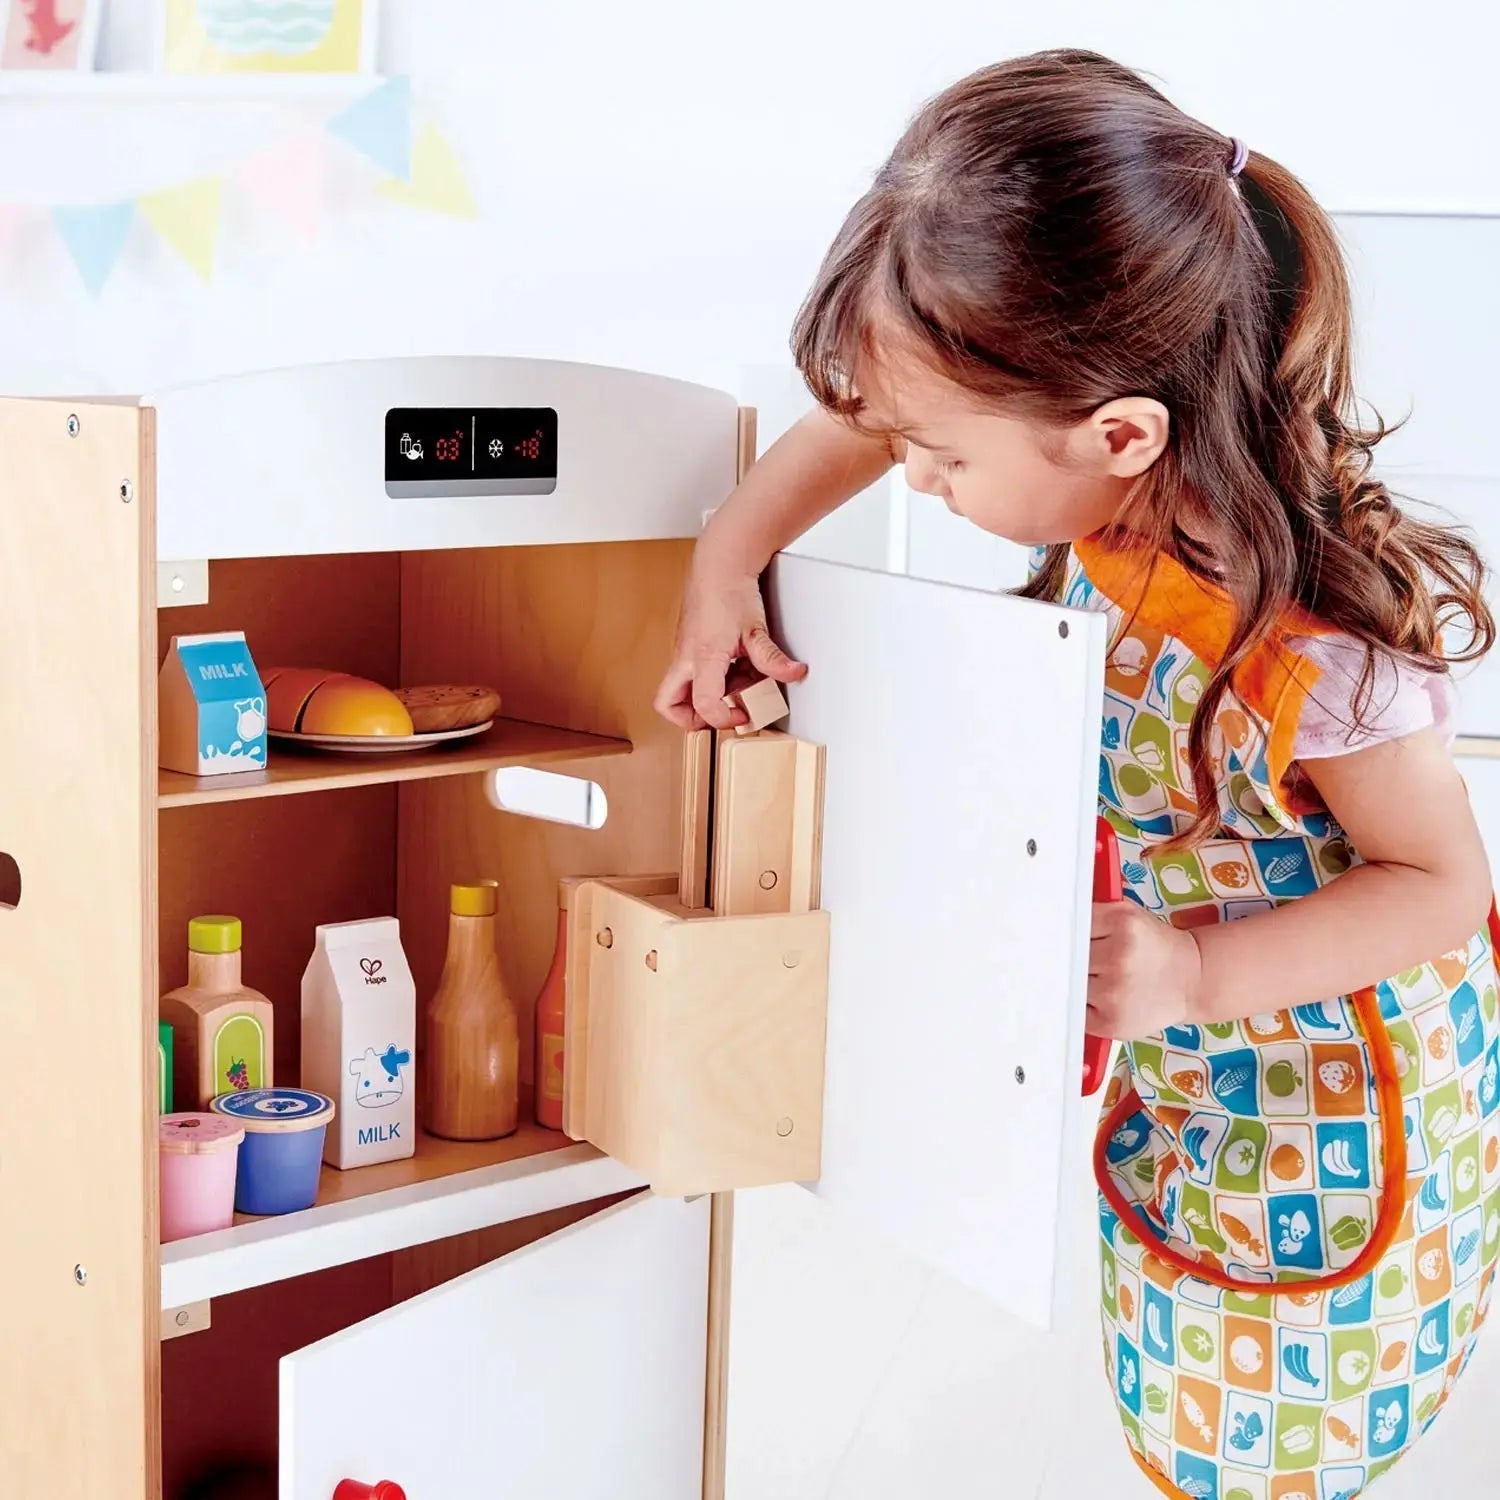 Simple Gourmet Refrigerator Organizer Storage Bins, Set of 6